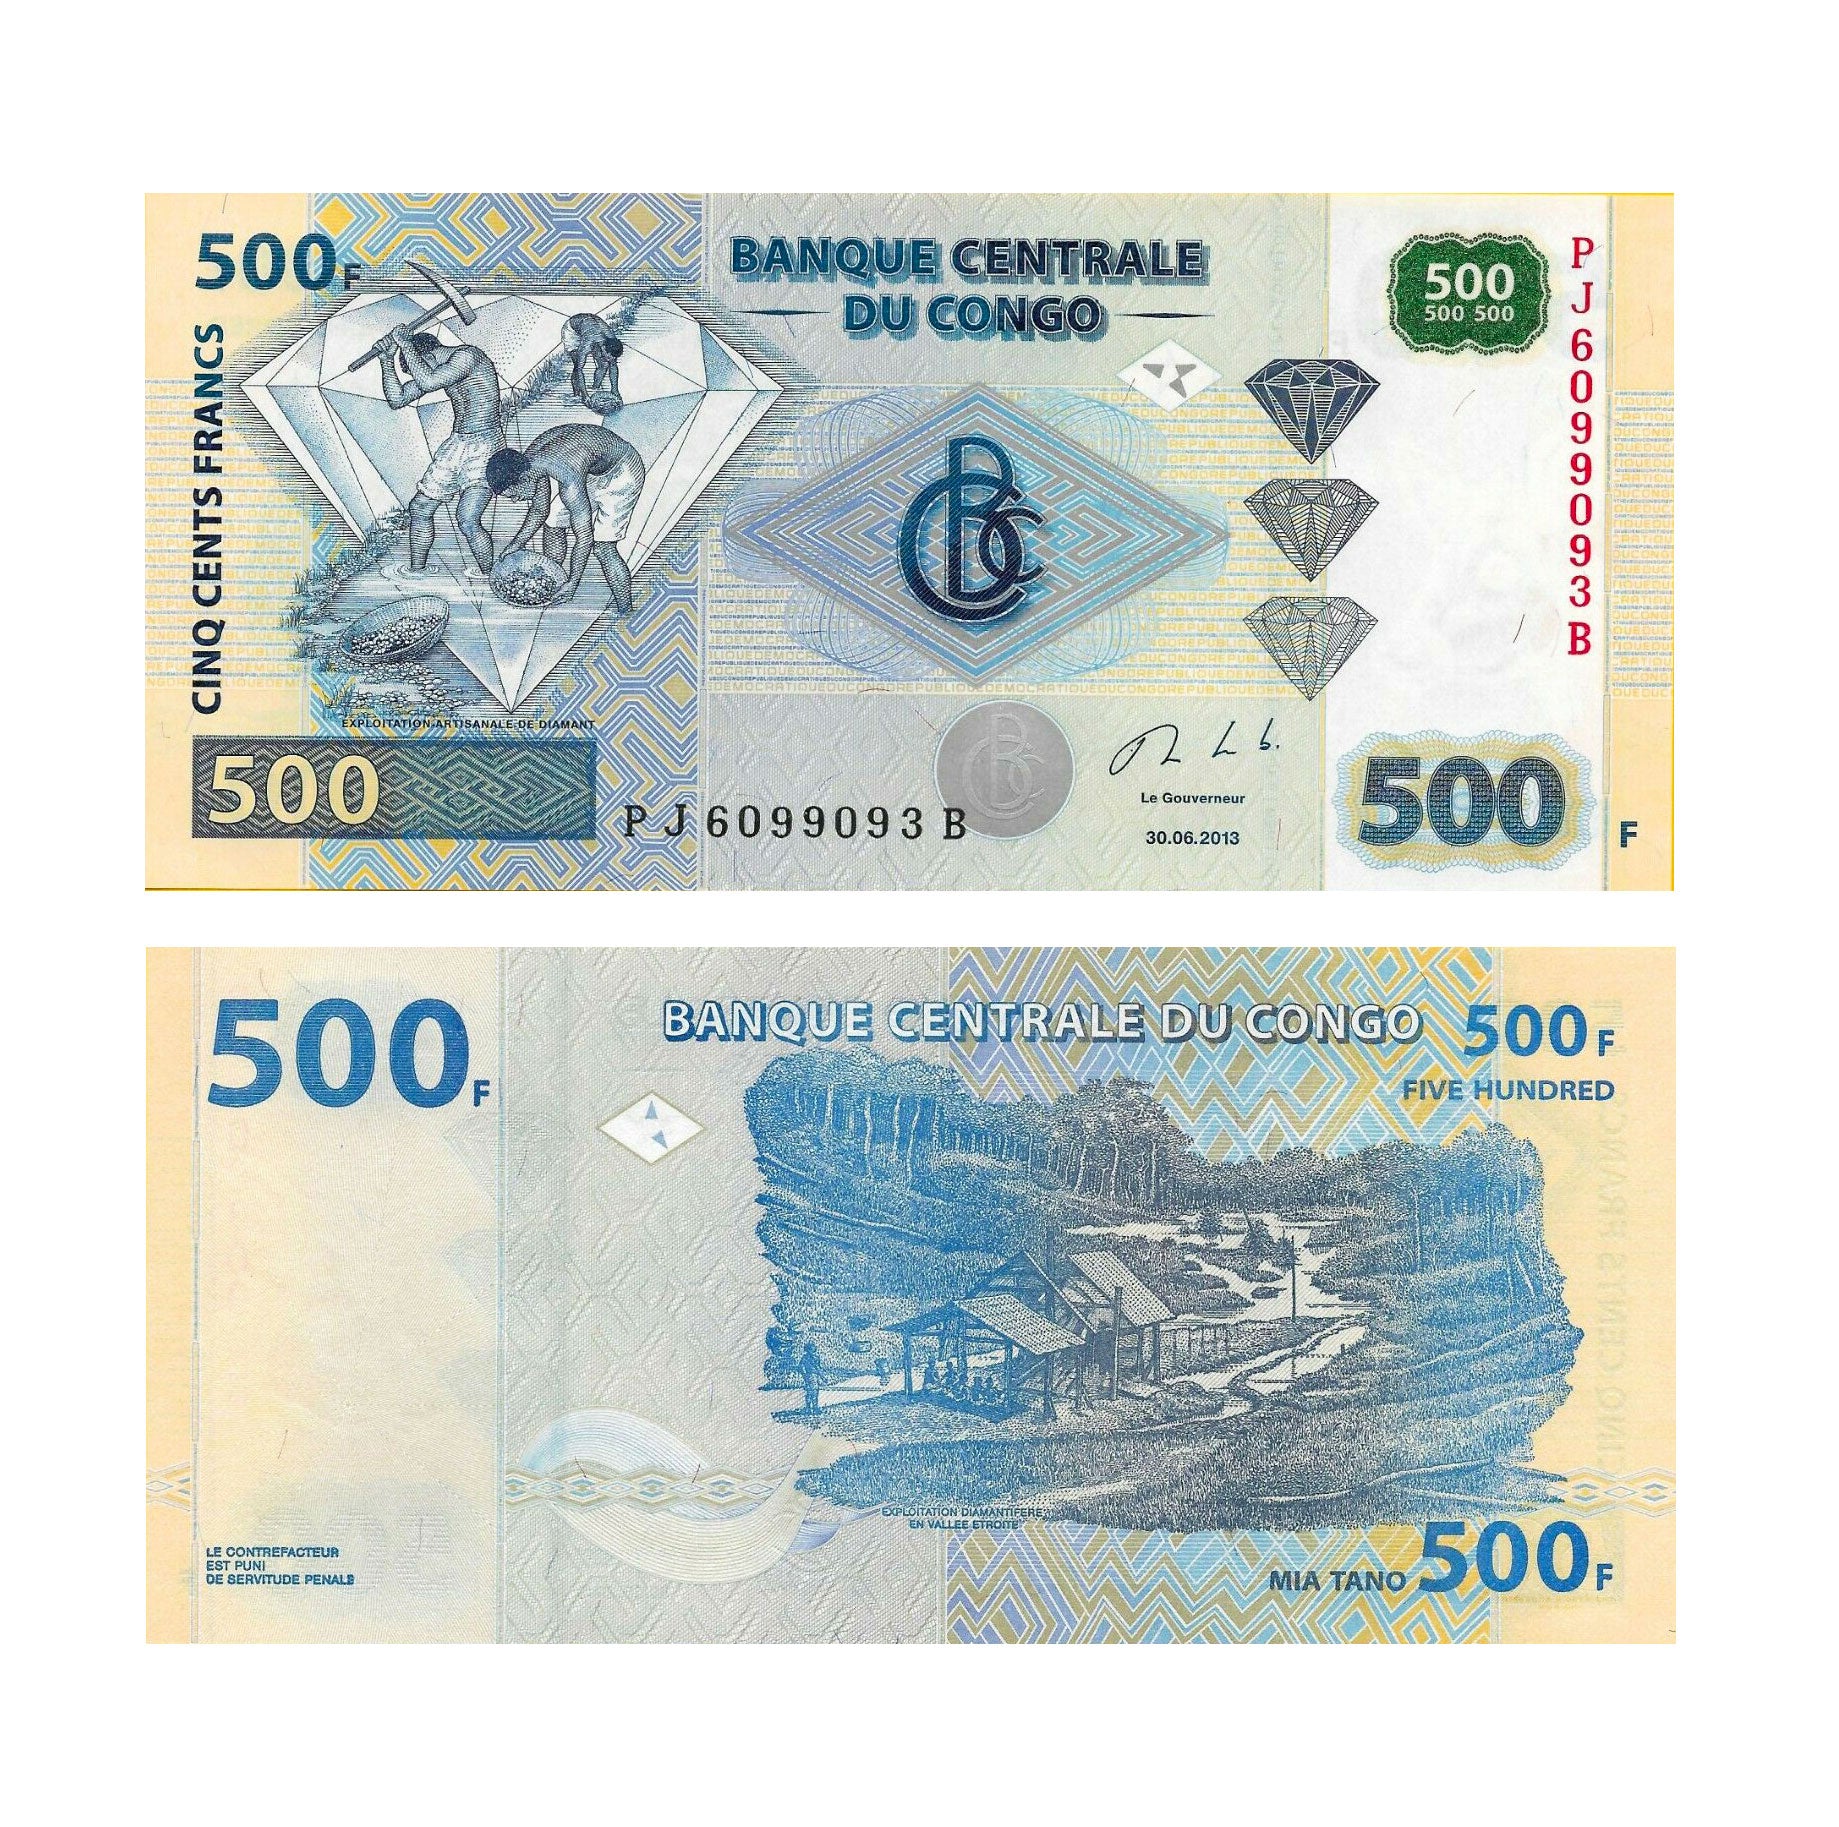 KONGO 4 BANKNOTEN SET | 50 - 500 FRANCS 2013 UNZ